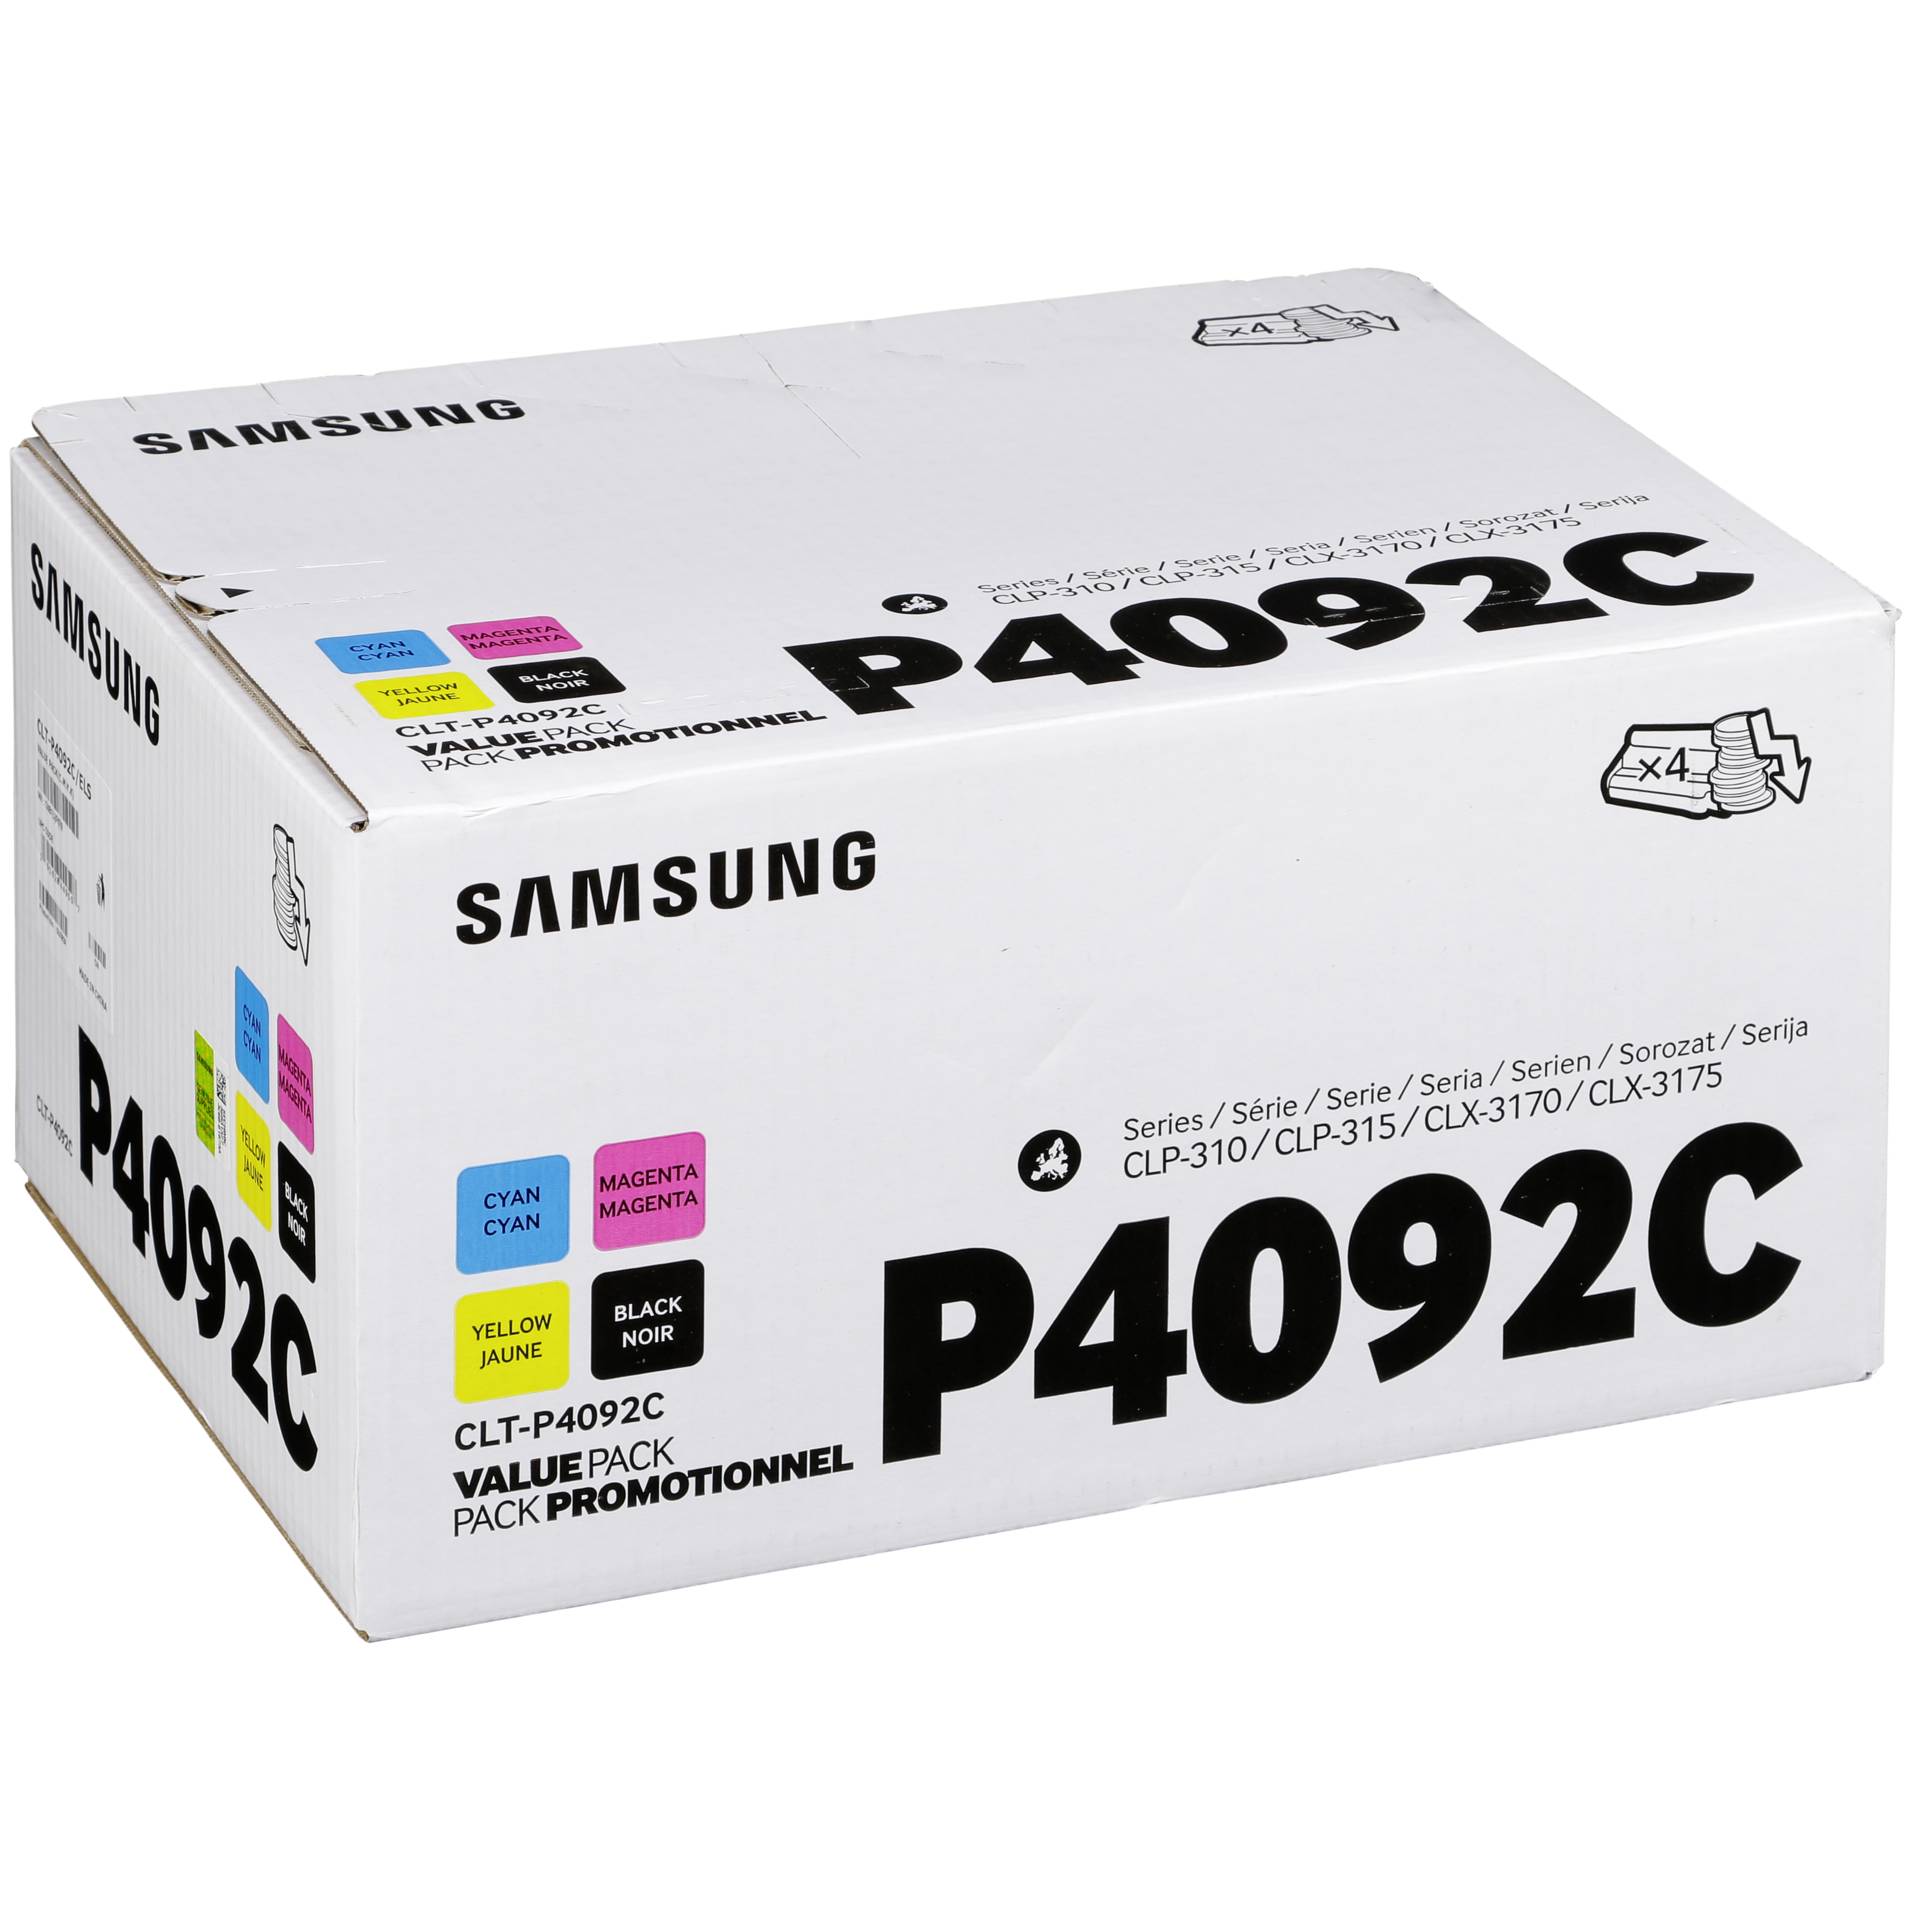 Samsung CLT-P 4092 C Value Pack CYMK